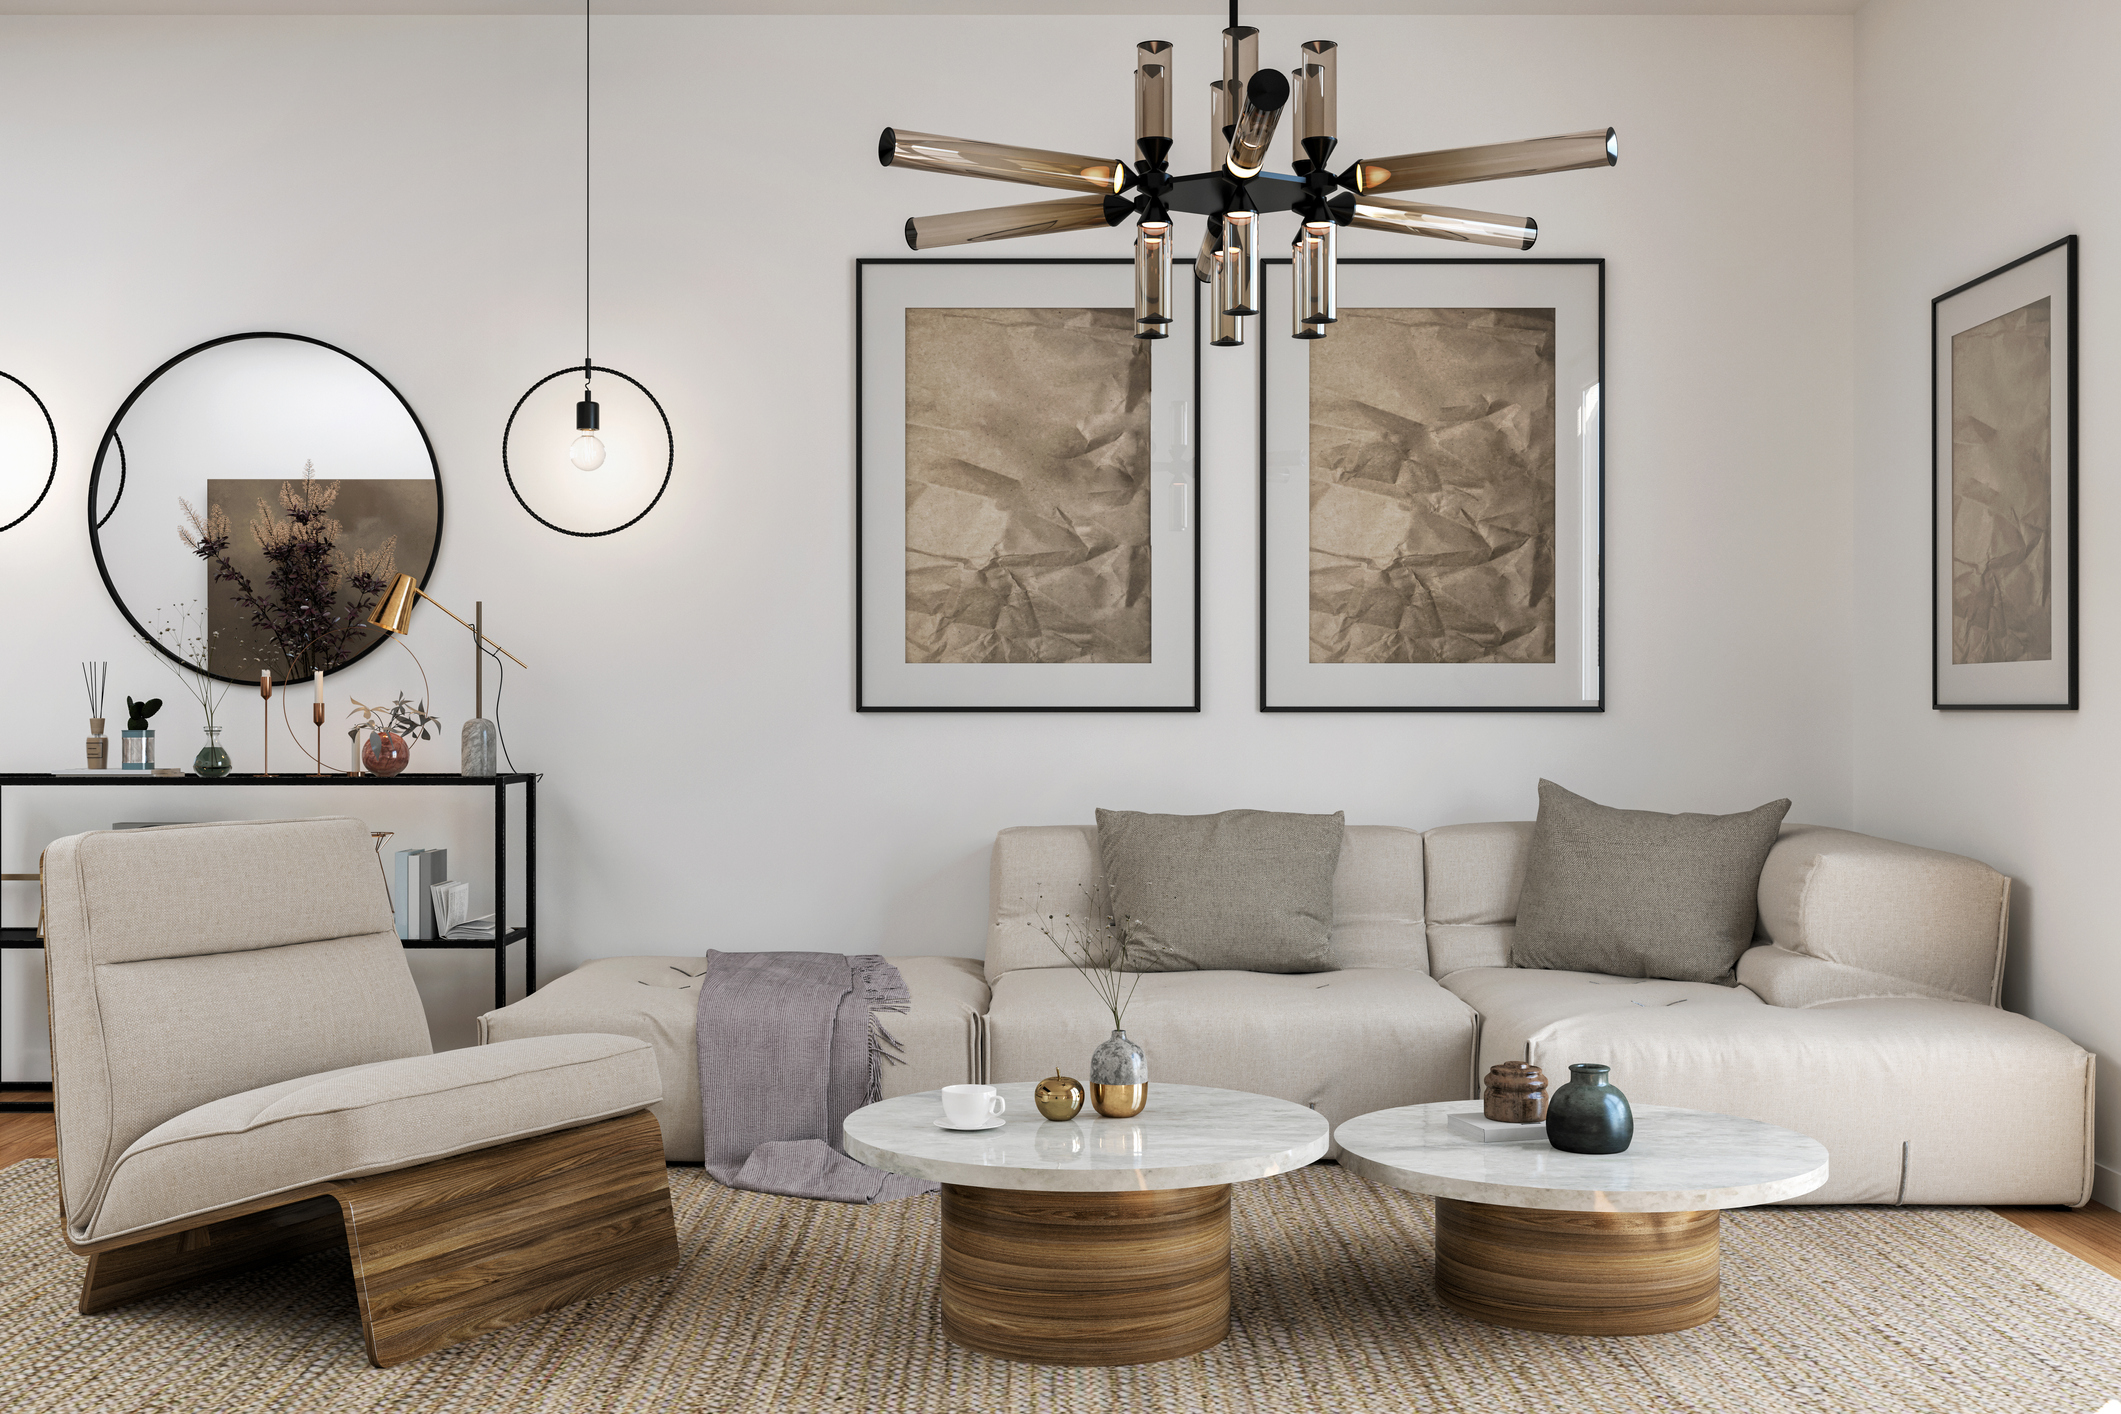 A LUXURY MODERN INTERIOR DESIGN | Modern Furniture by Caffe Latte Home